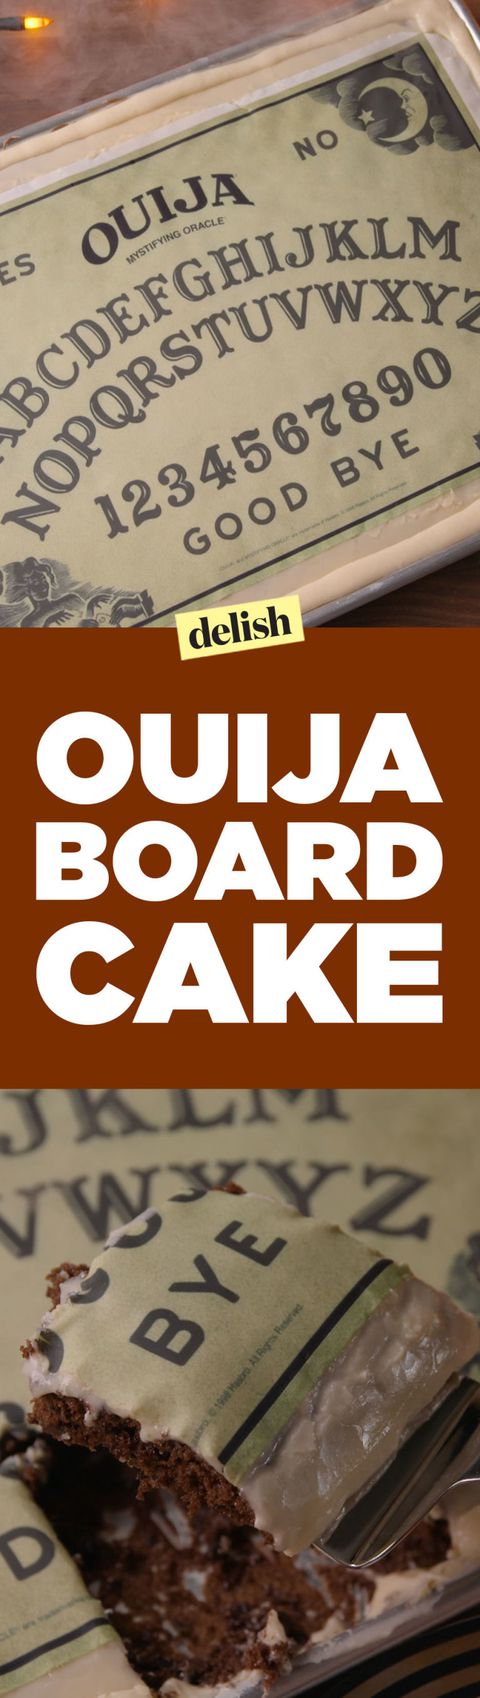 Ouija Board Cake Pinterest